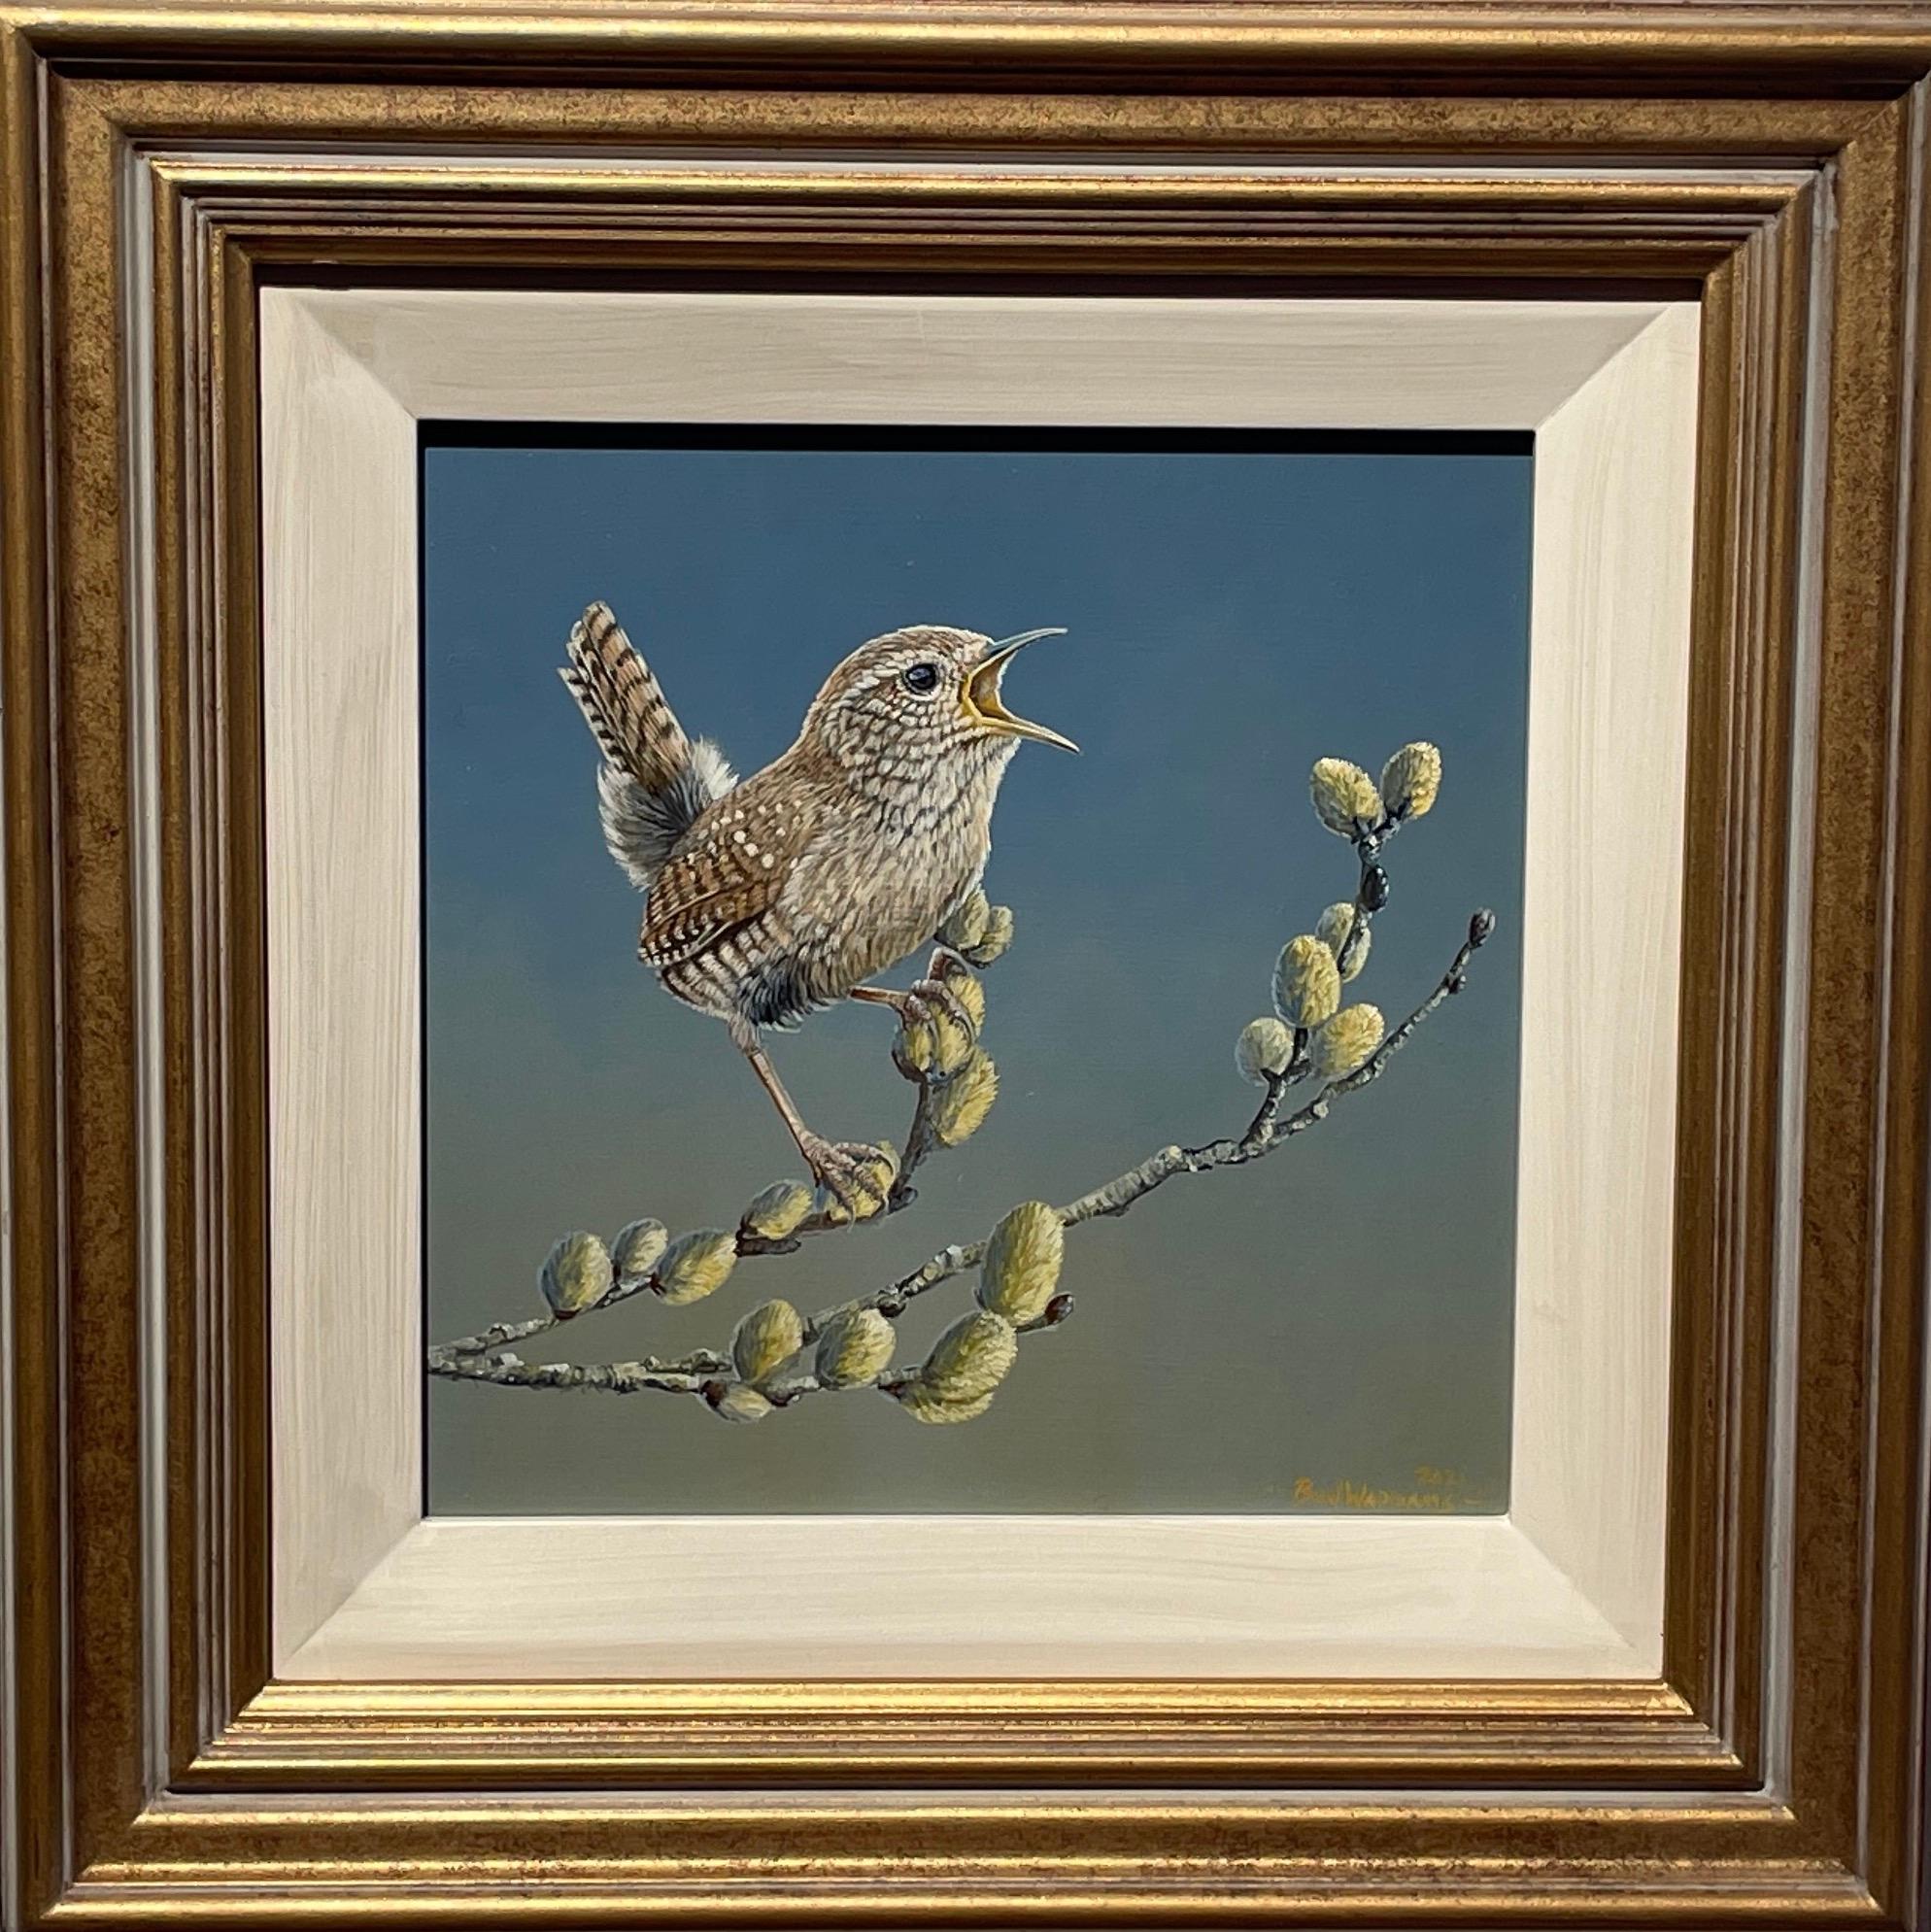 The Contemporary photorealist painting of a Wren small bird wild (peinture contemporaine photoréaliste d'un petit oiseau sauvage). - Painting de Ben Waddams